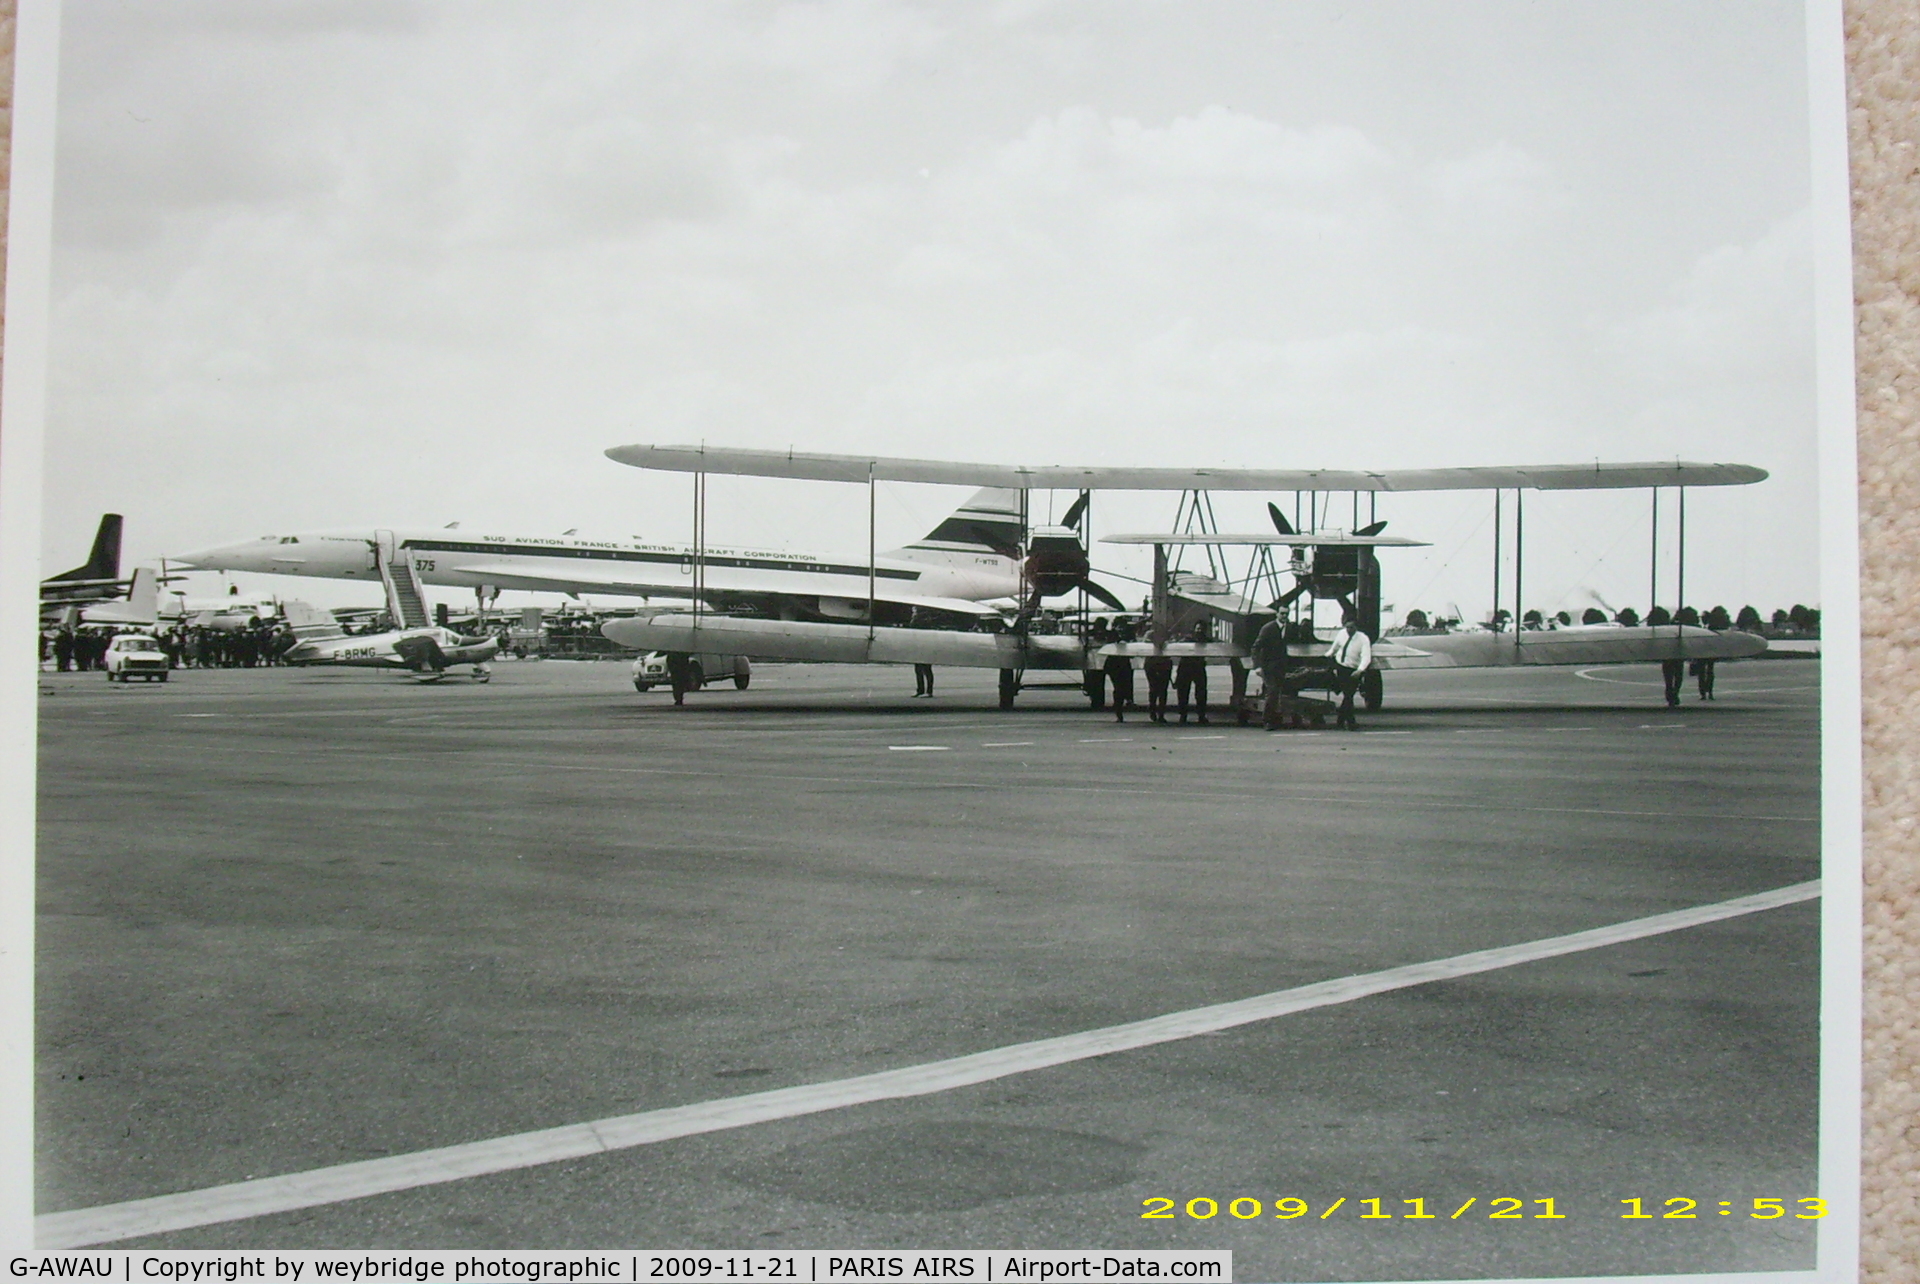 G-AWAU, Vickers FB-27A Vimy (replica) C/N VAFA02, photo taken paris airshow, f-wtss and f-brmg in background